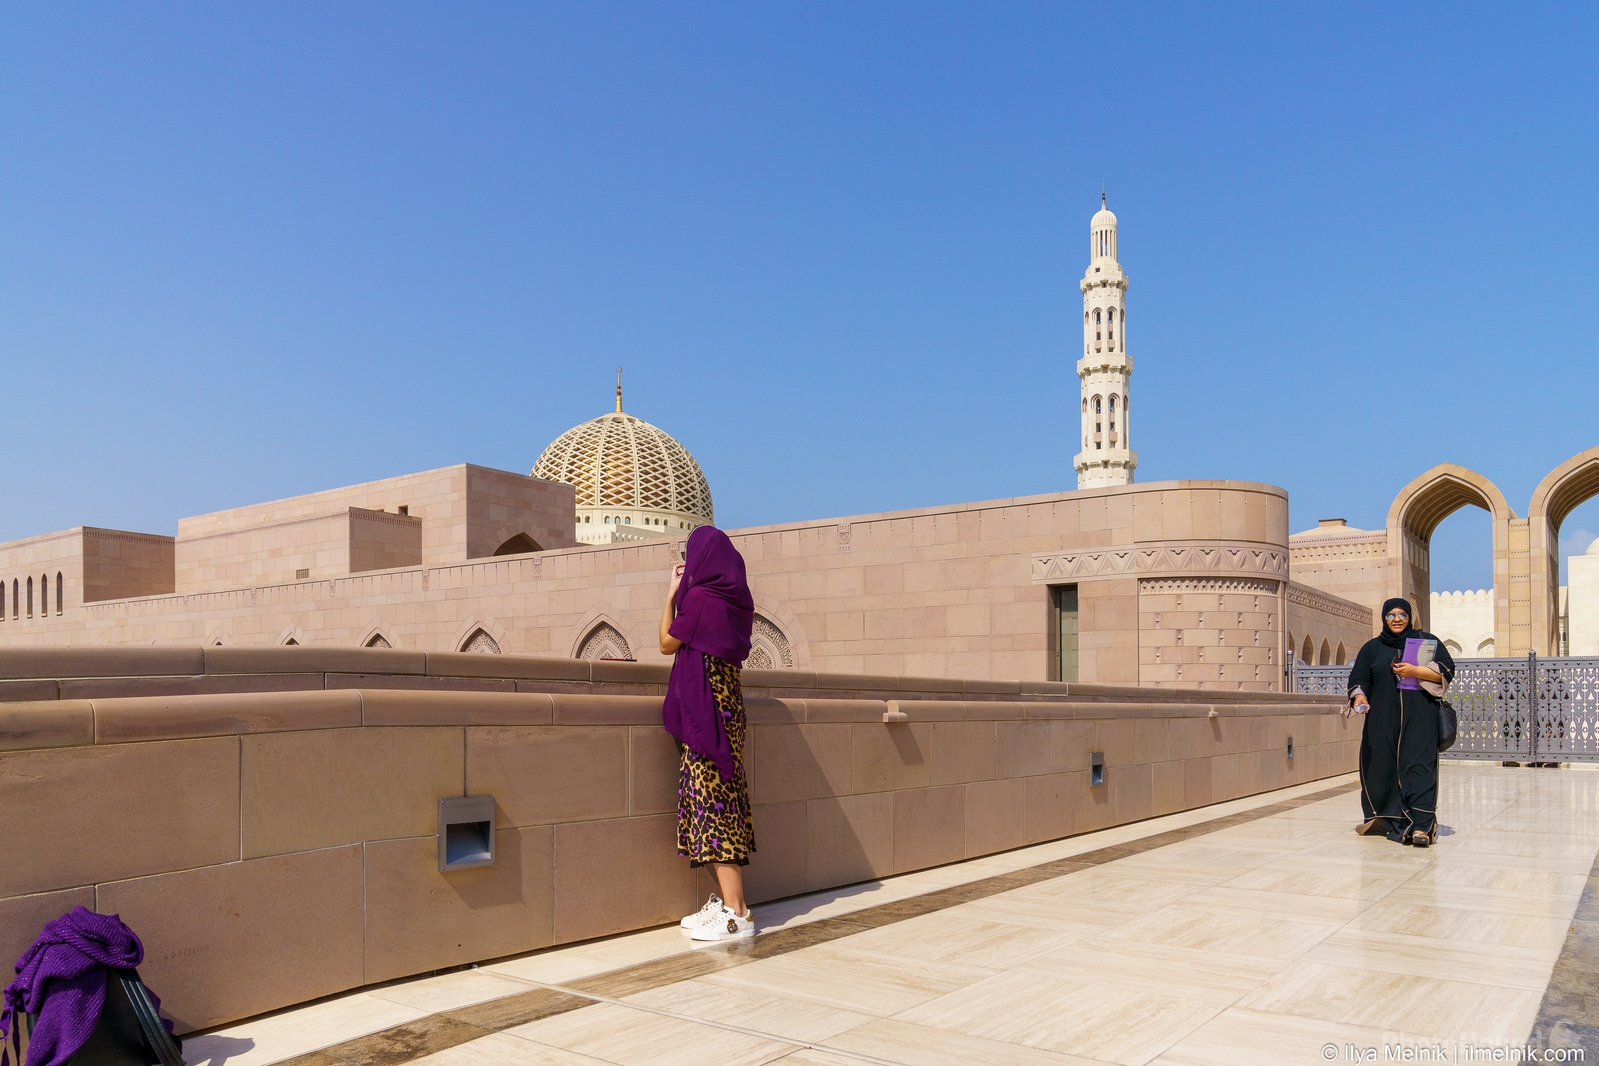 Image of Sultan Qaboos Grand Mosque, Muscat by Ilya Melnik